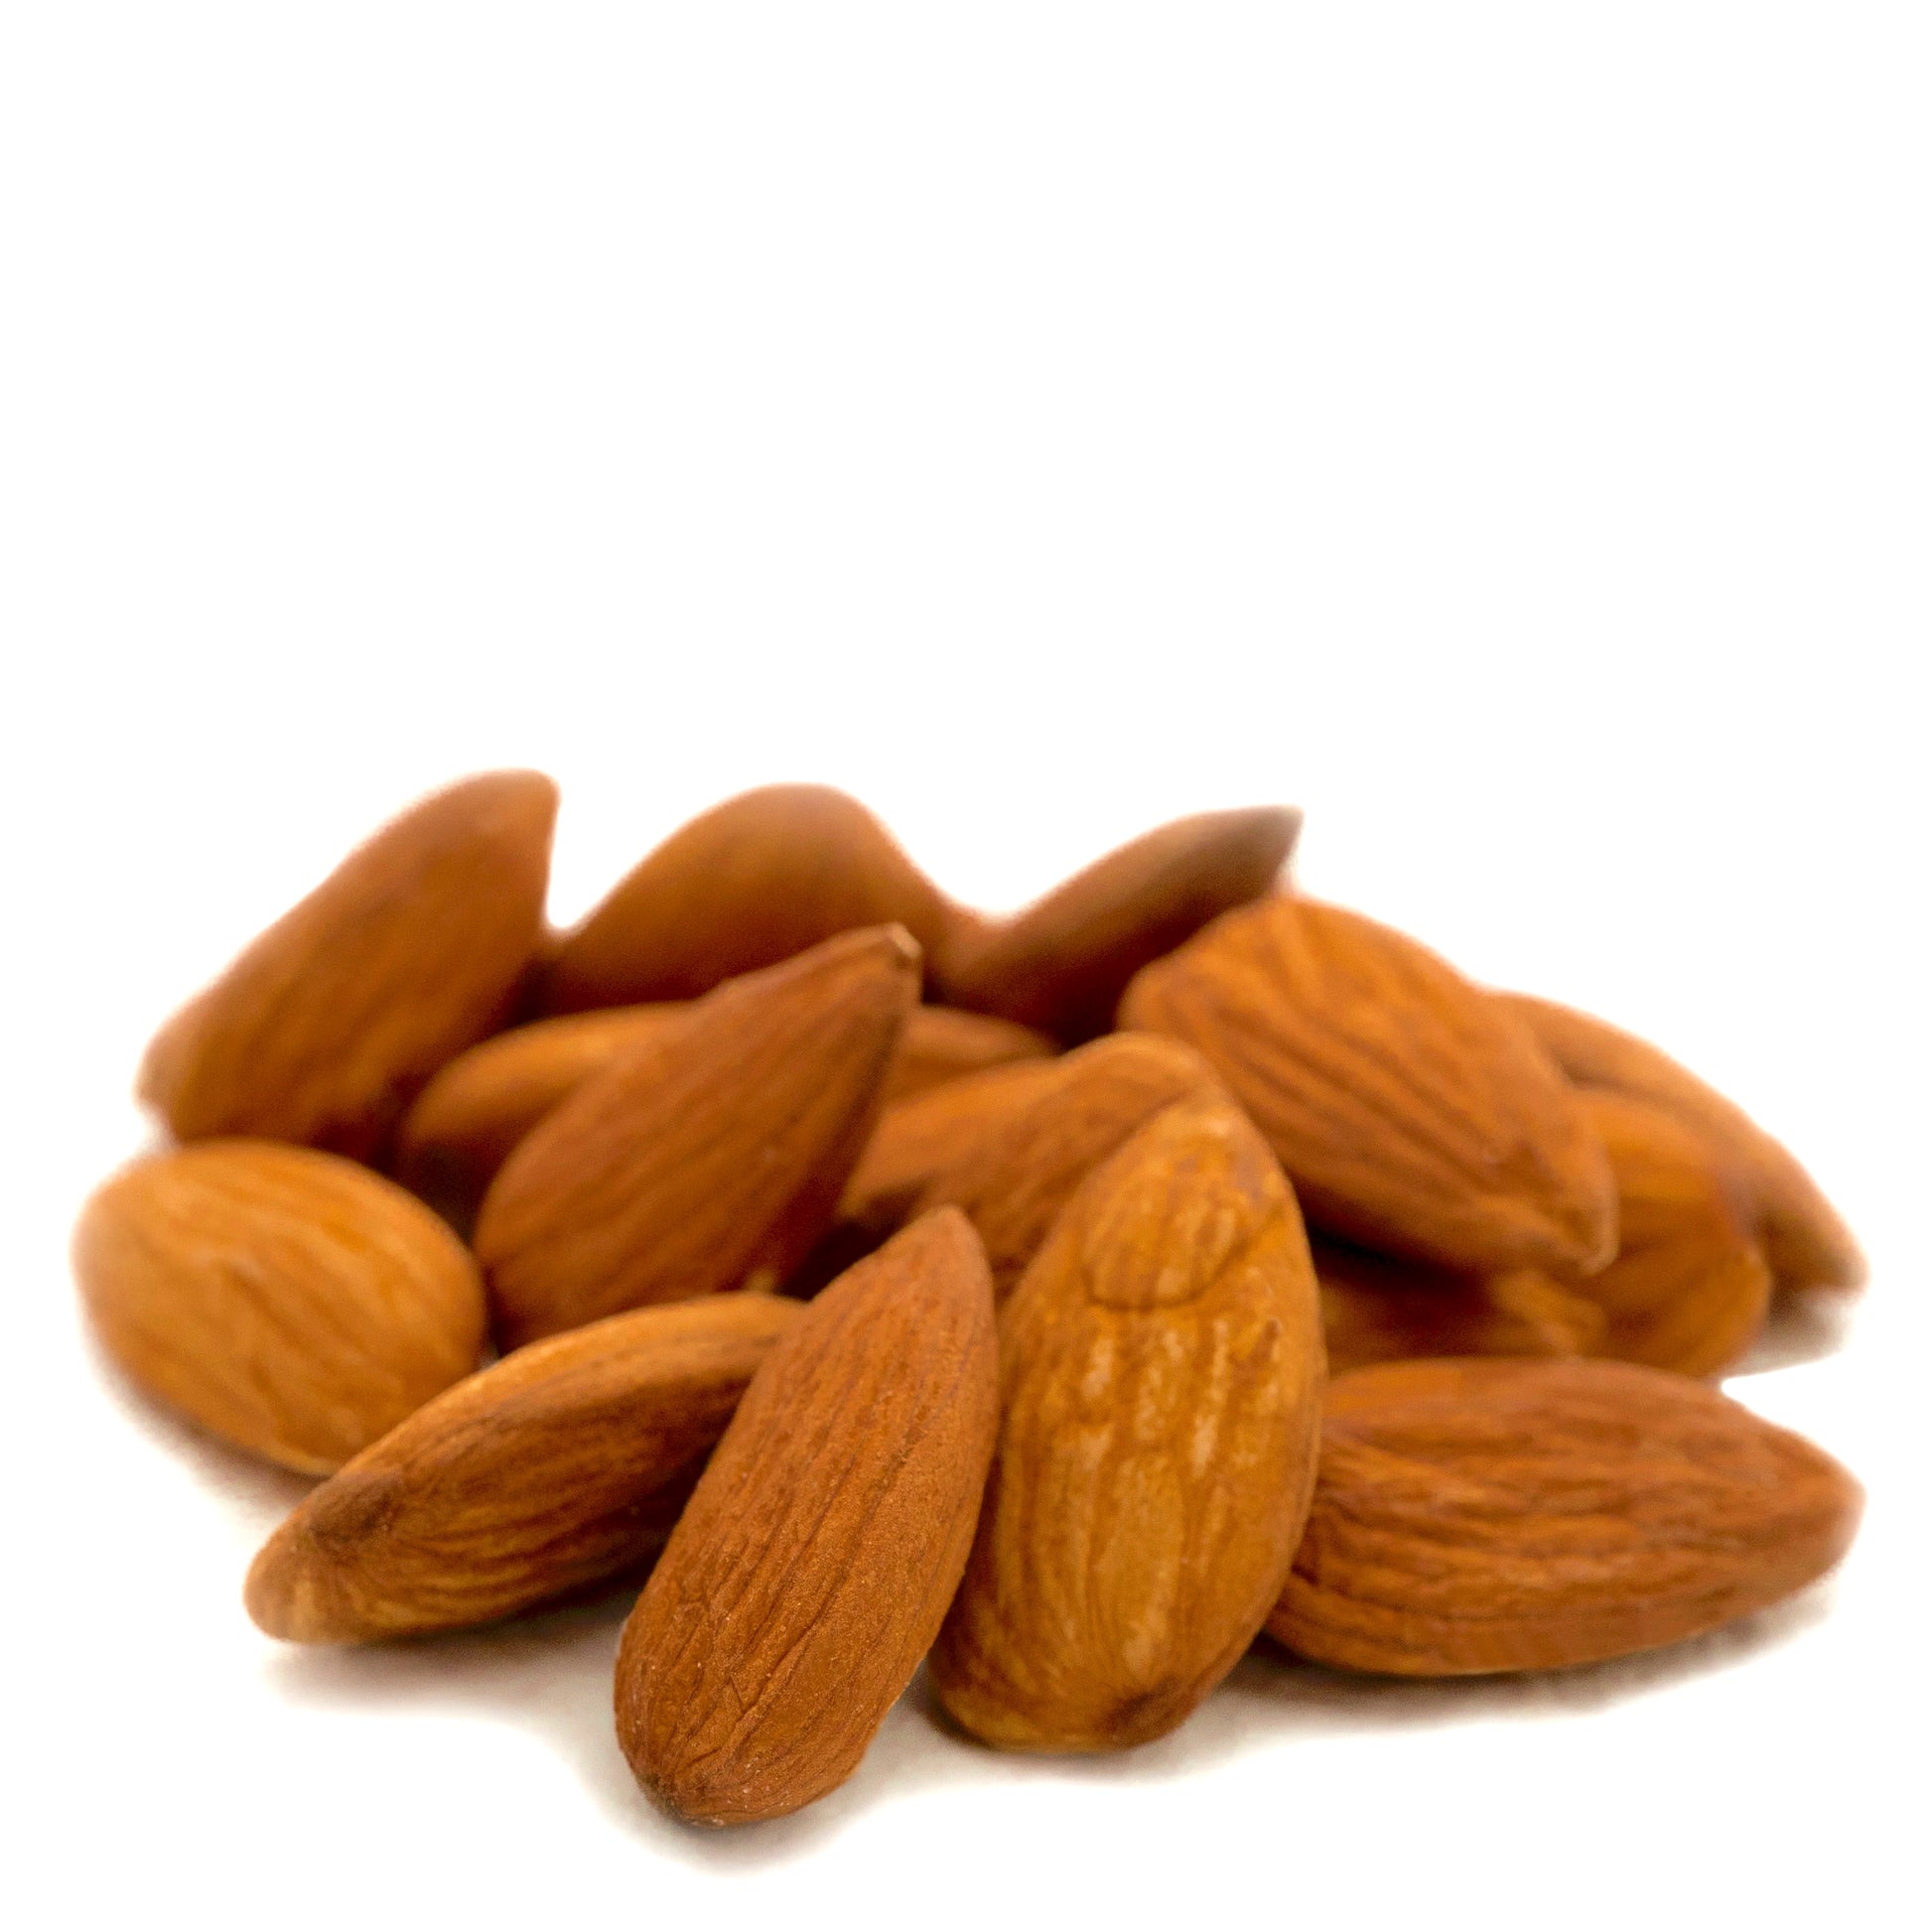 True California Organic Natural Raw Unsalted Nonpareil Almonds